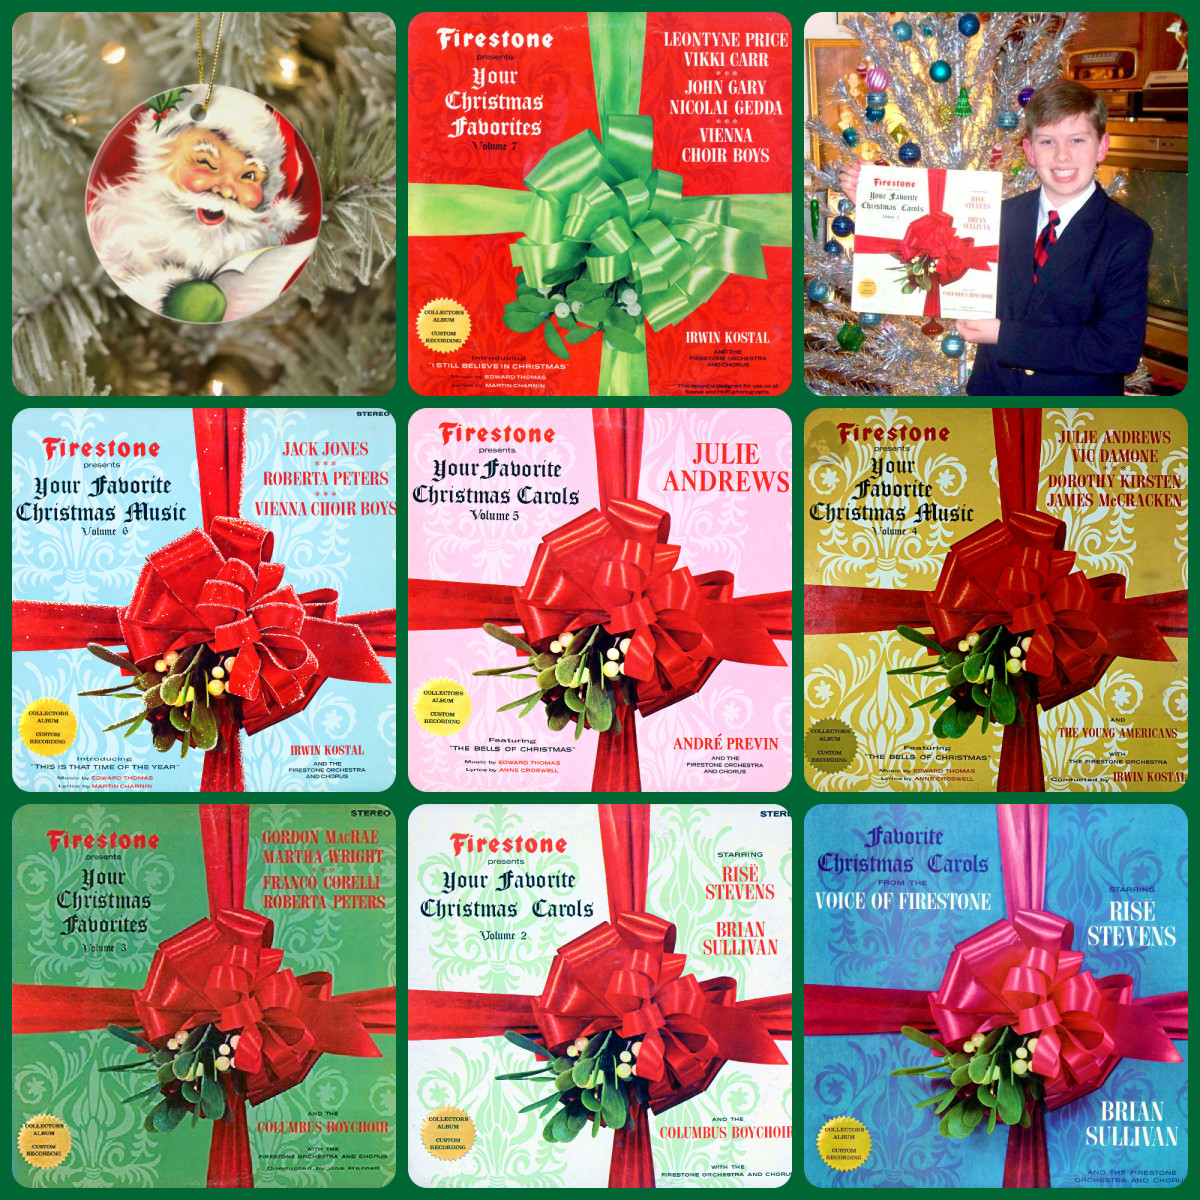 The Complete 1-7 Volume Set Vinyl LP Firestone Your Favorite Christmas Carols